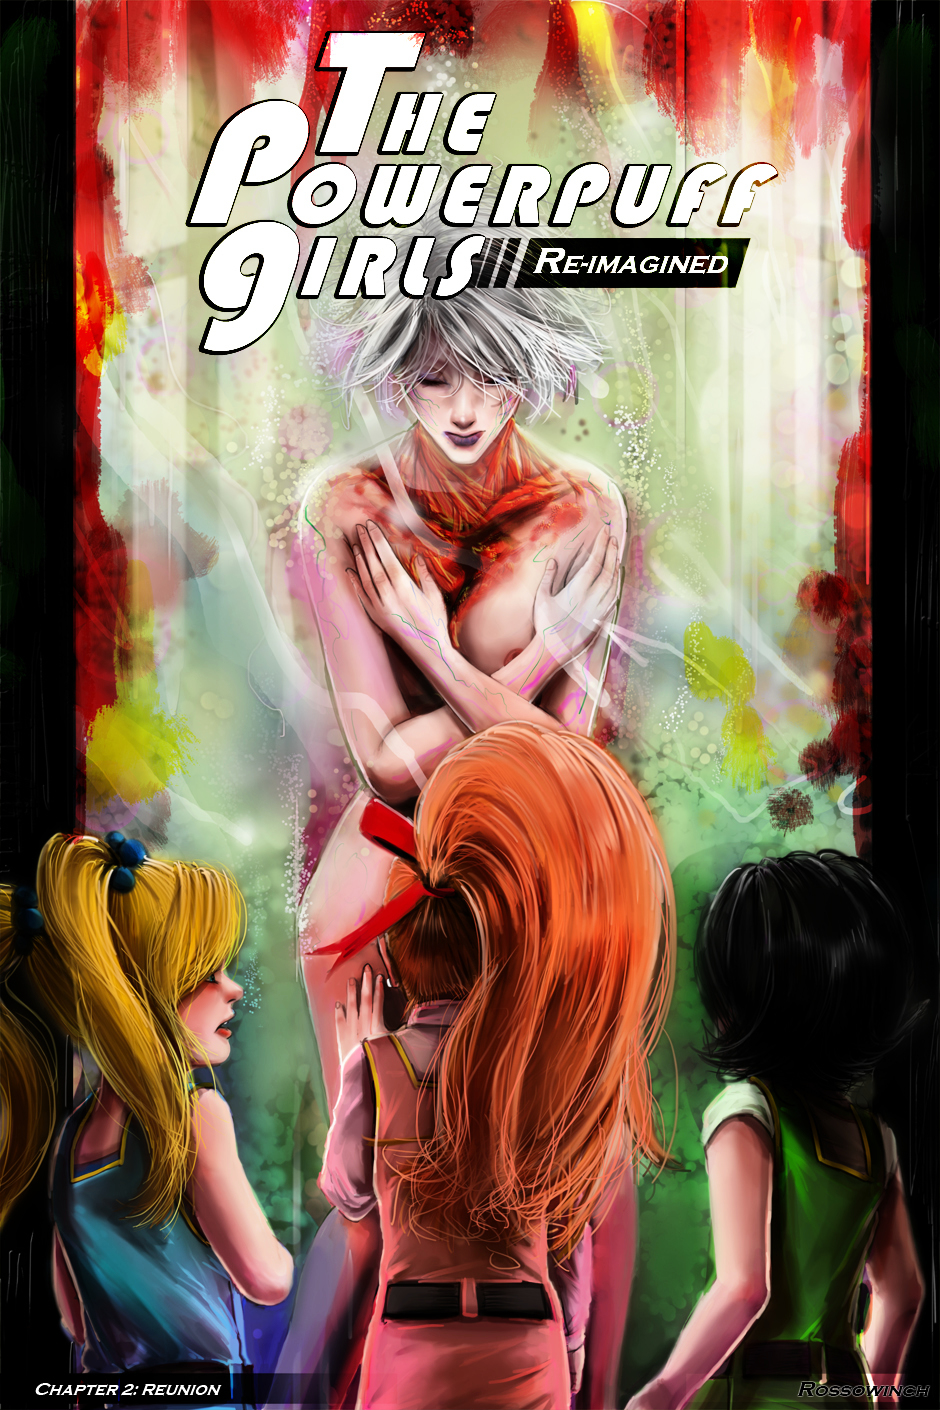 Powerpuff Girls Re-Imagined Chapter 2 Part1 : Reunion: Part 1 - Picture 1